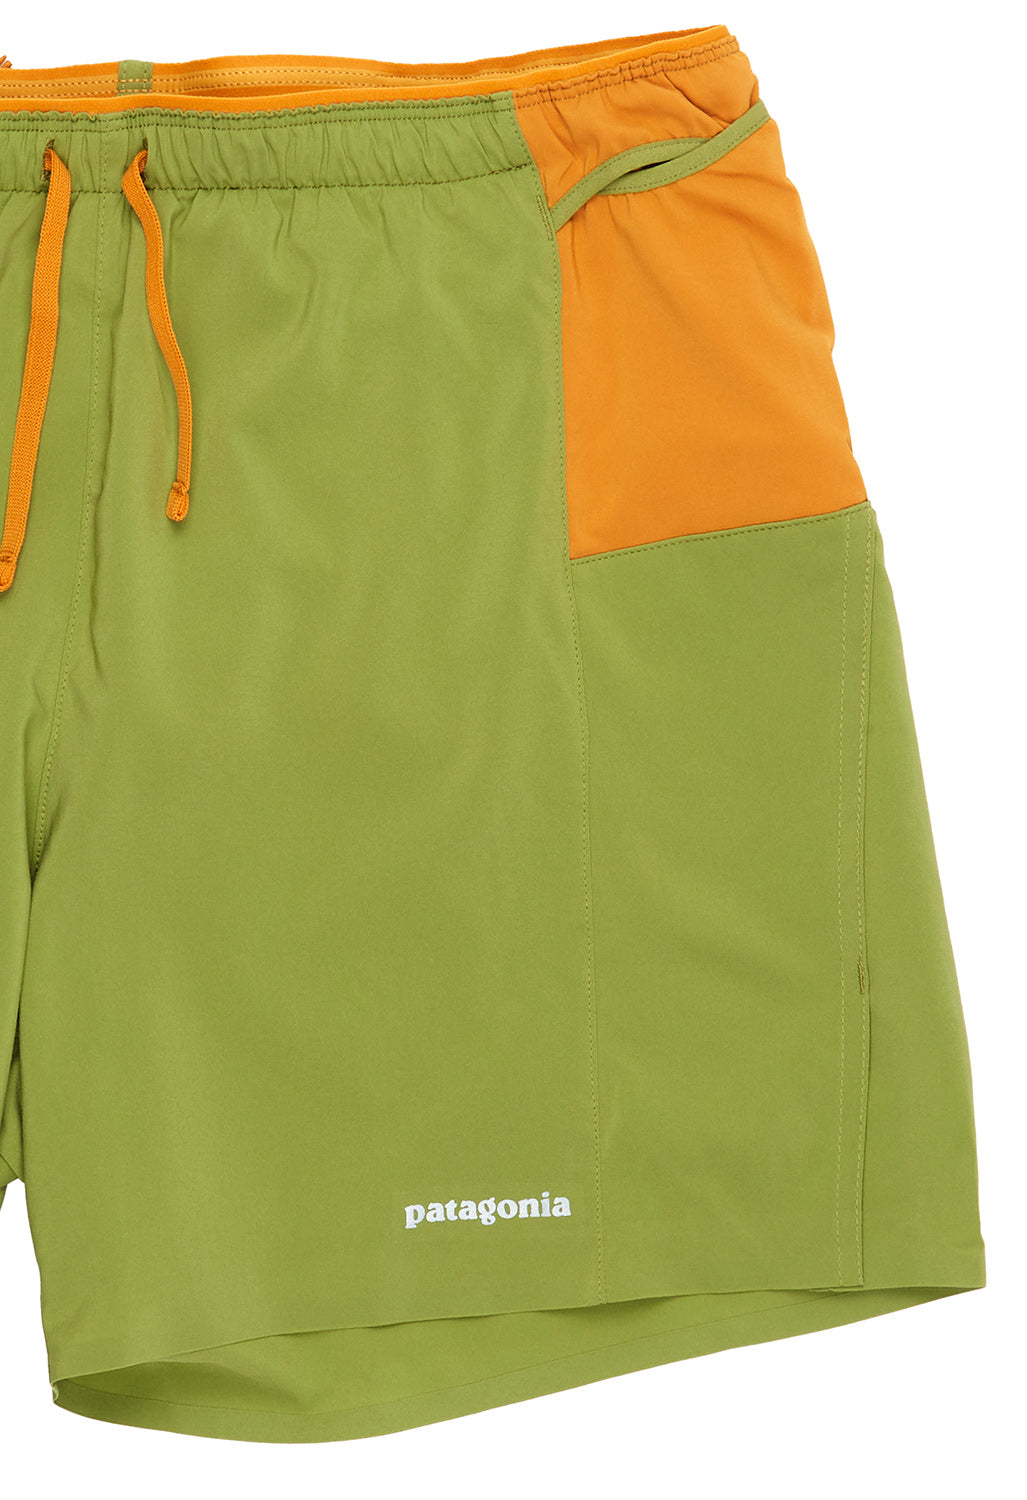 Patagonia Men's Strider Pro Shorts - 5 in. - Buckhorn Green